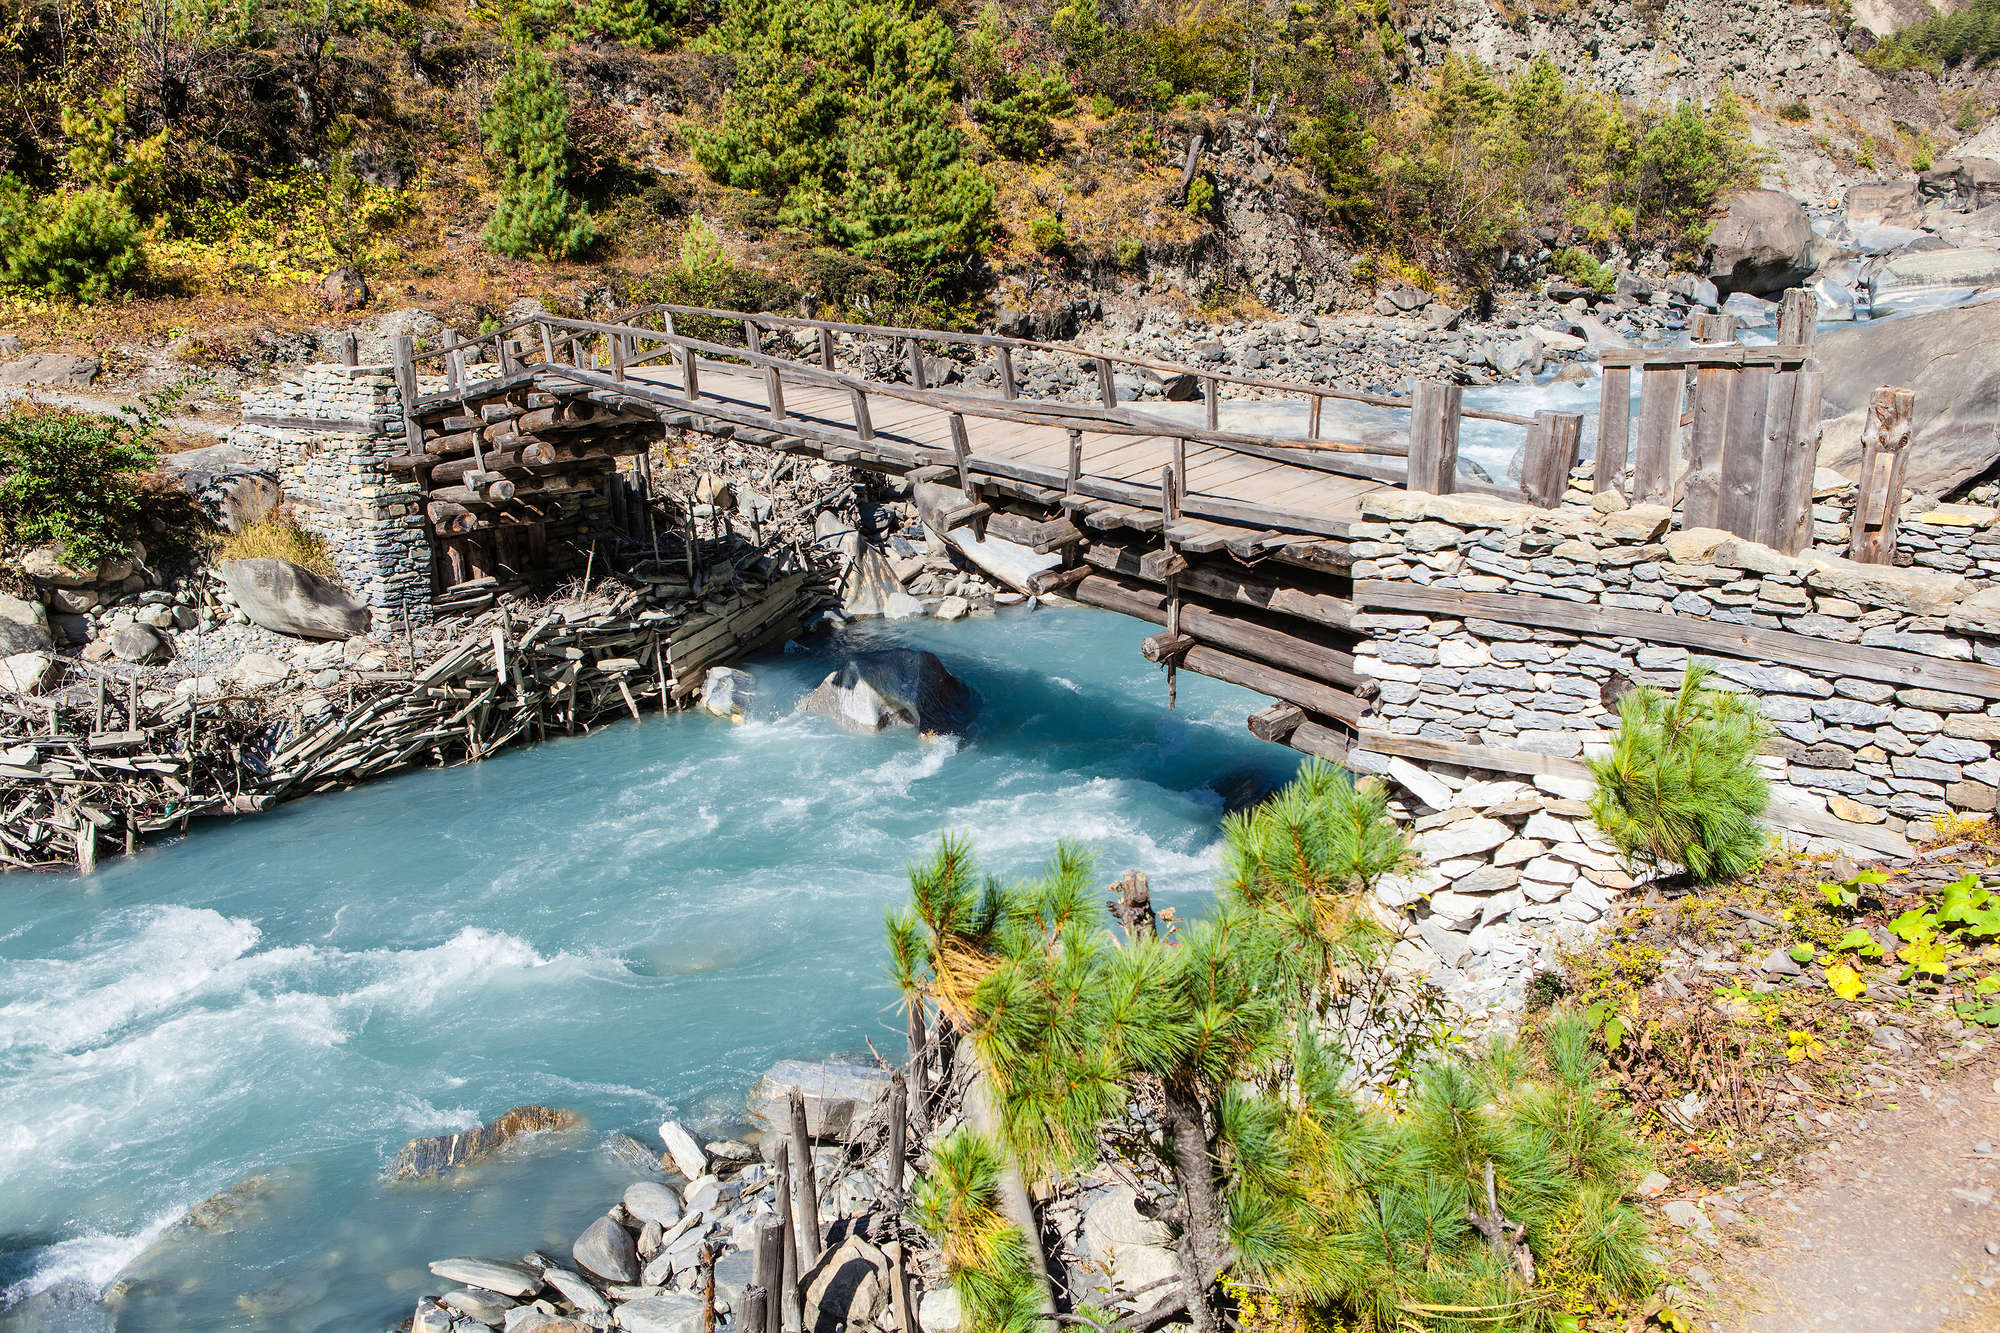             Natur Fototapete Fluss mit alter Holzbrücke auf Premium Glattvlies
        